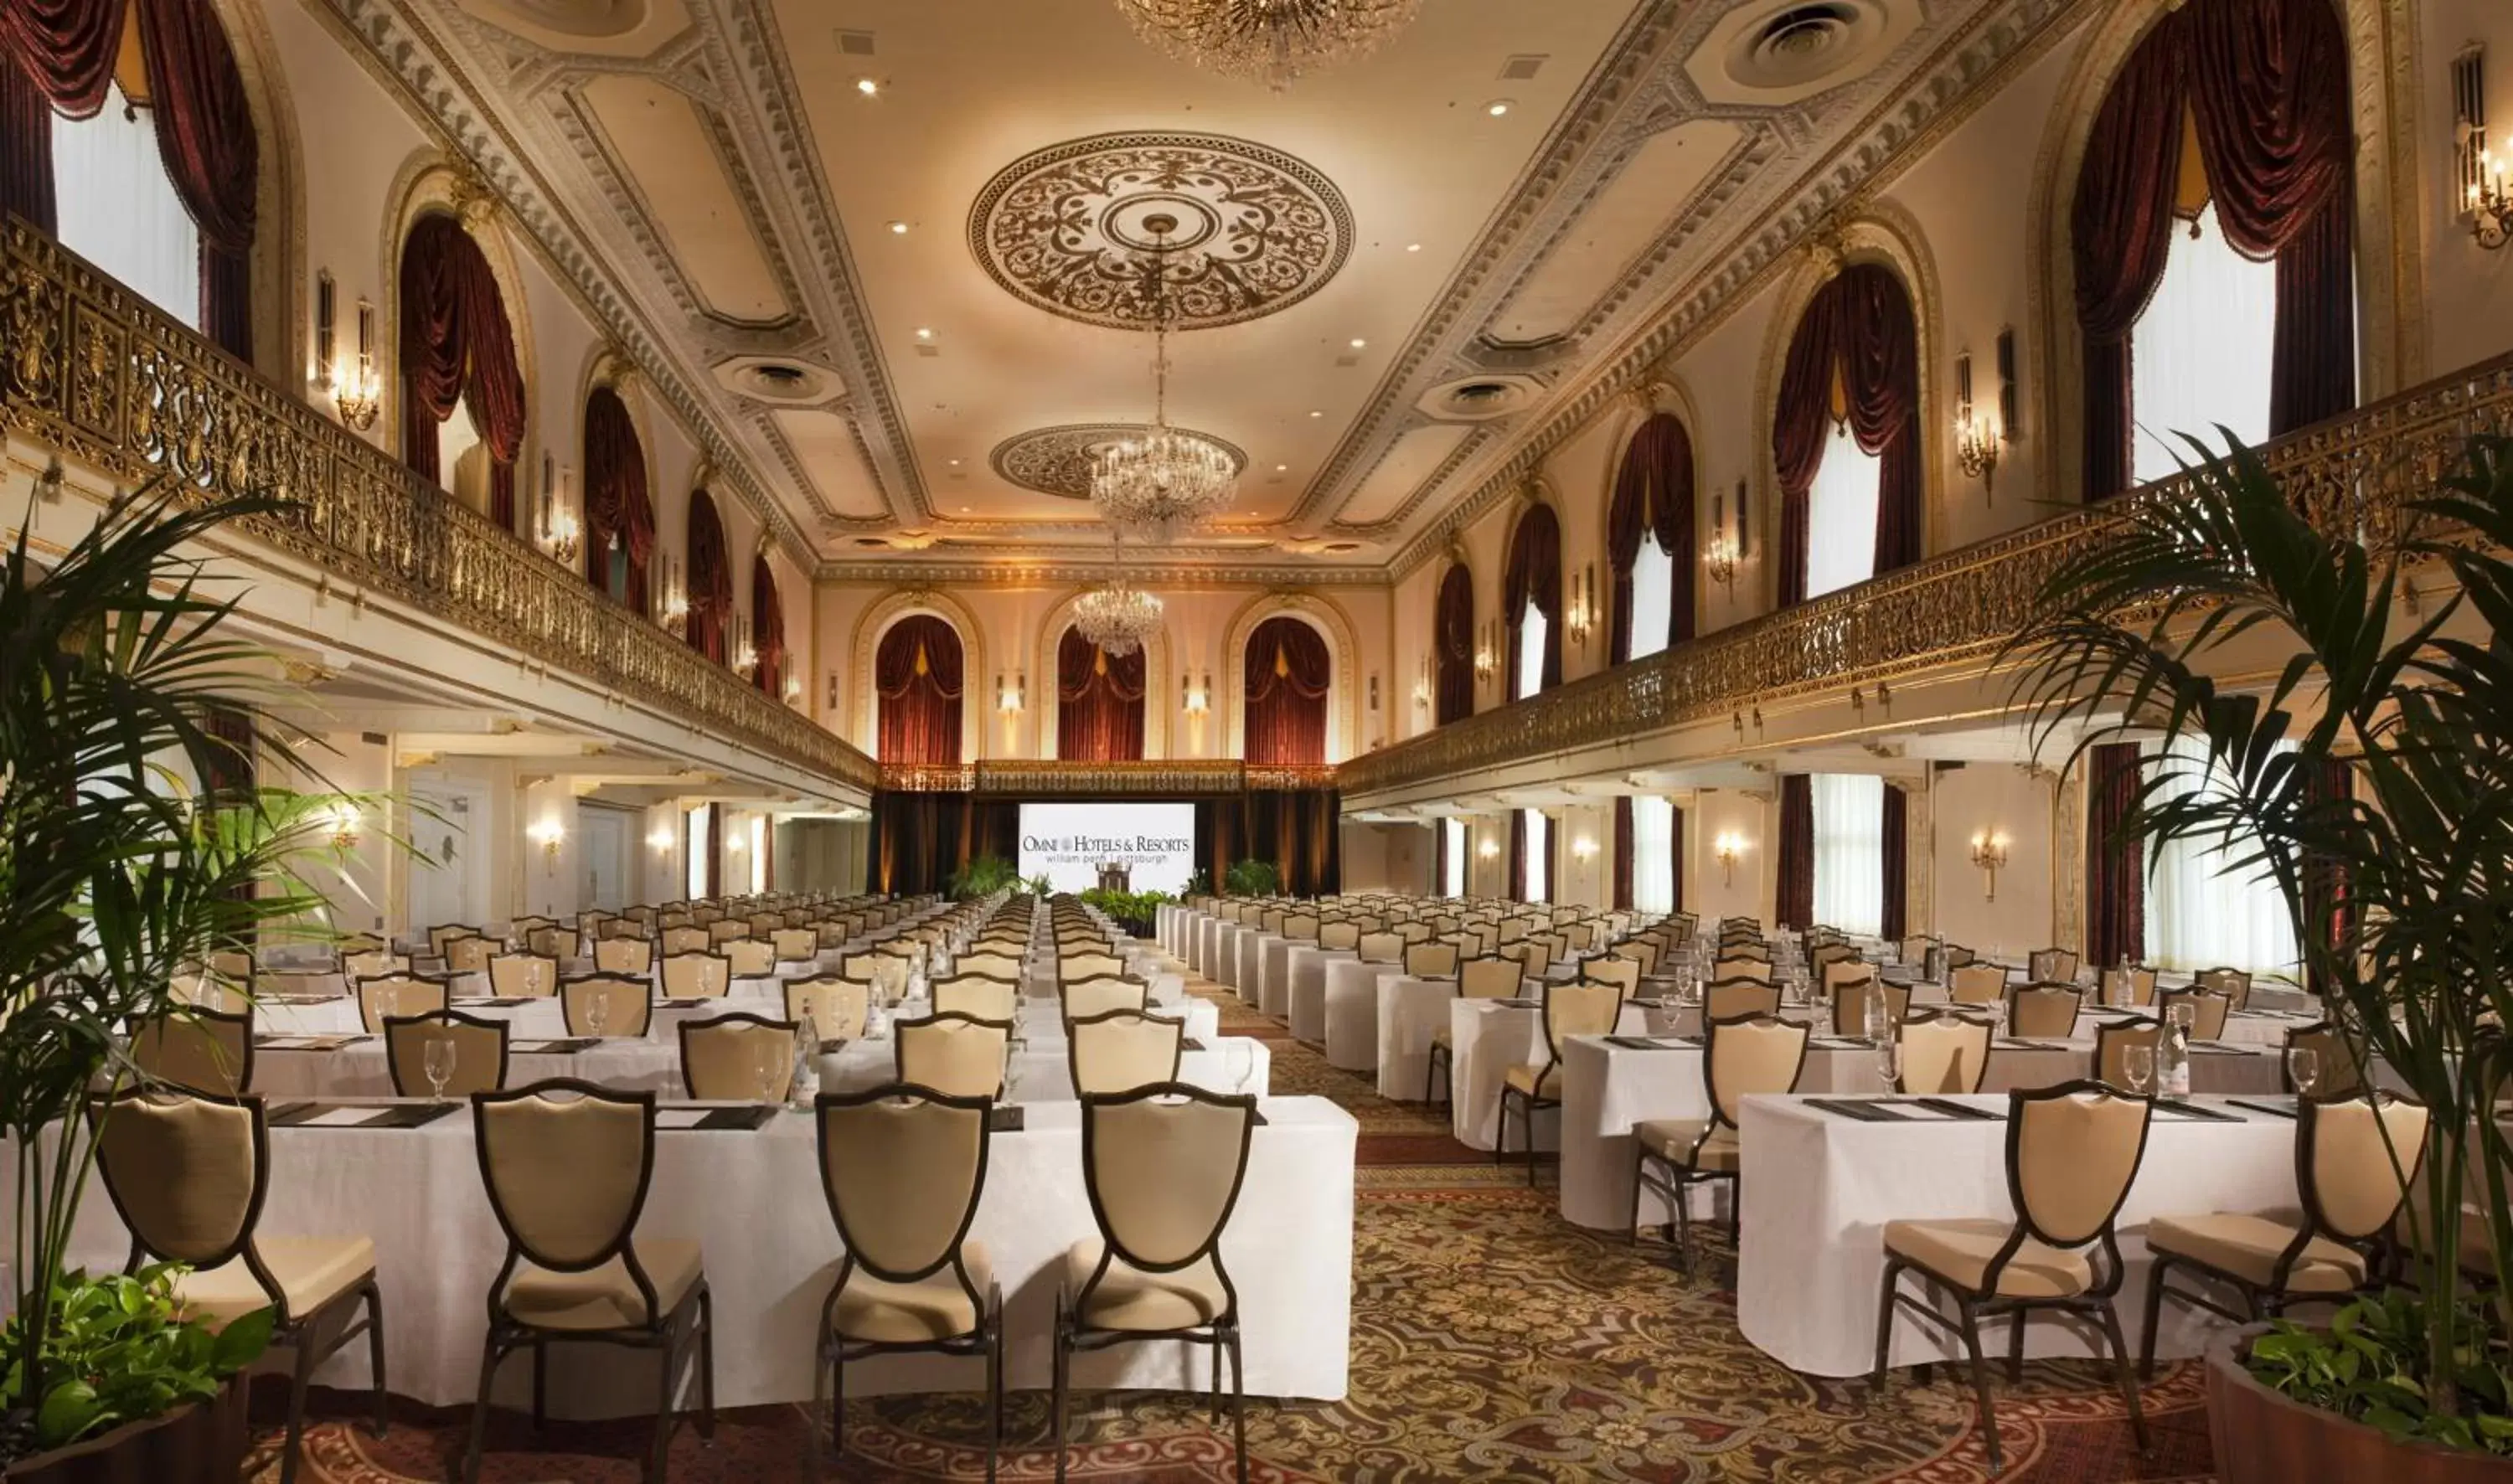 Banquet/Function facilities, Banquet Facilities in Omni William Penn Hotel